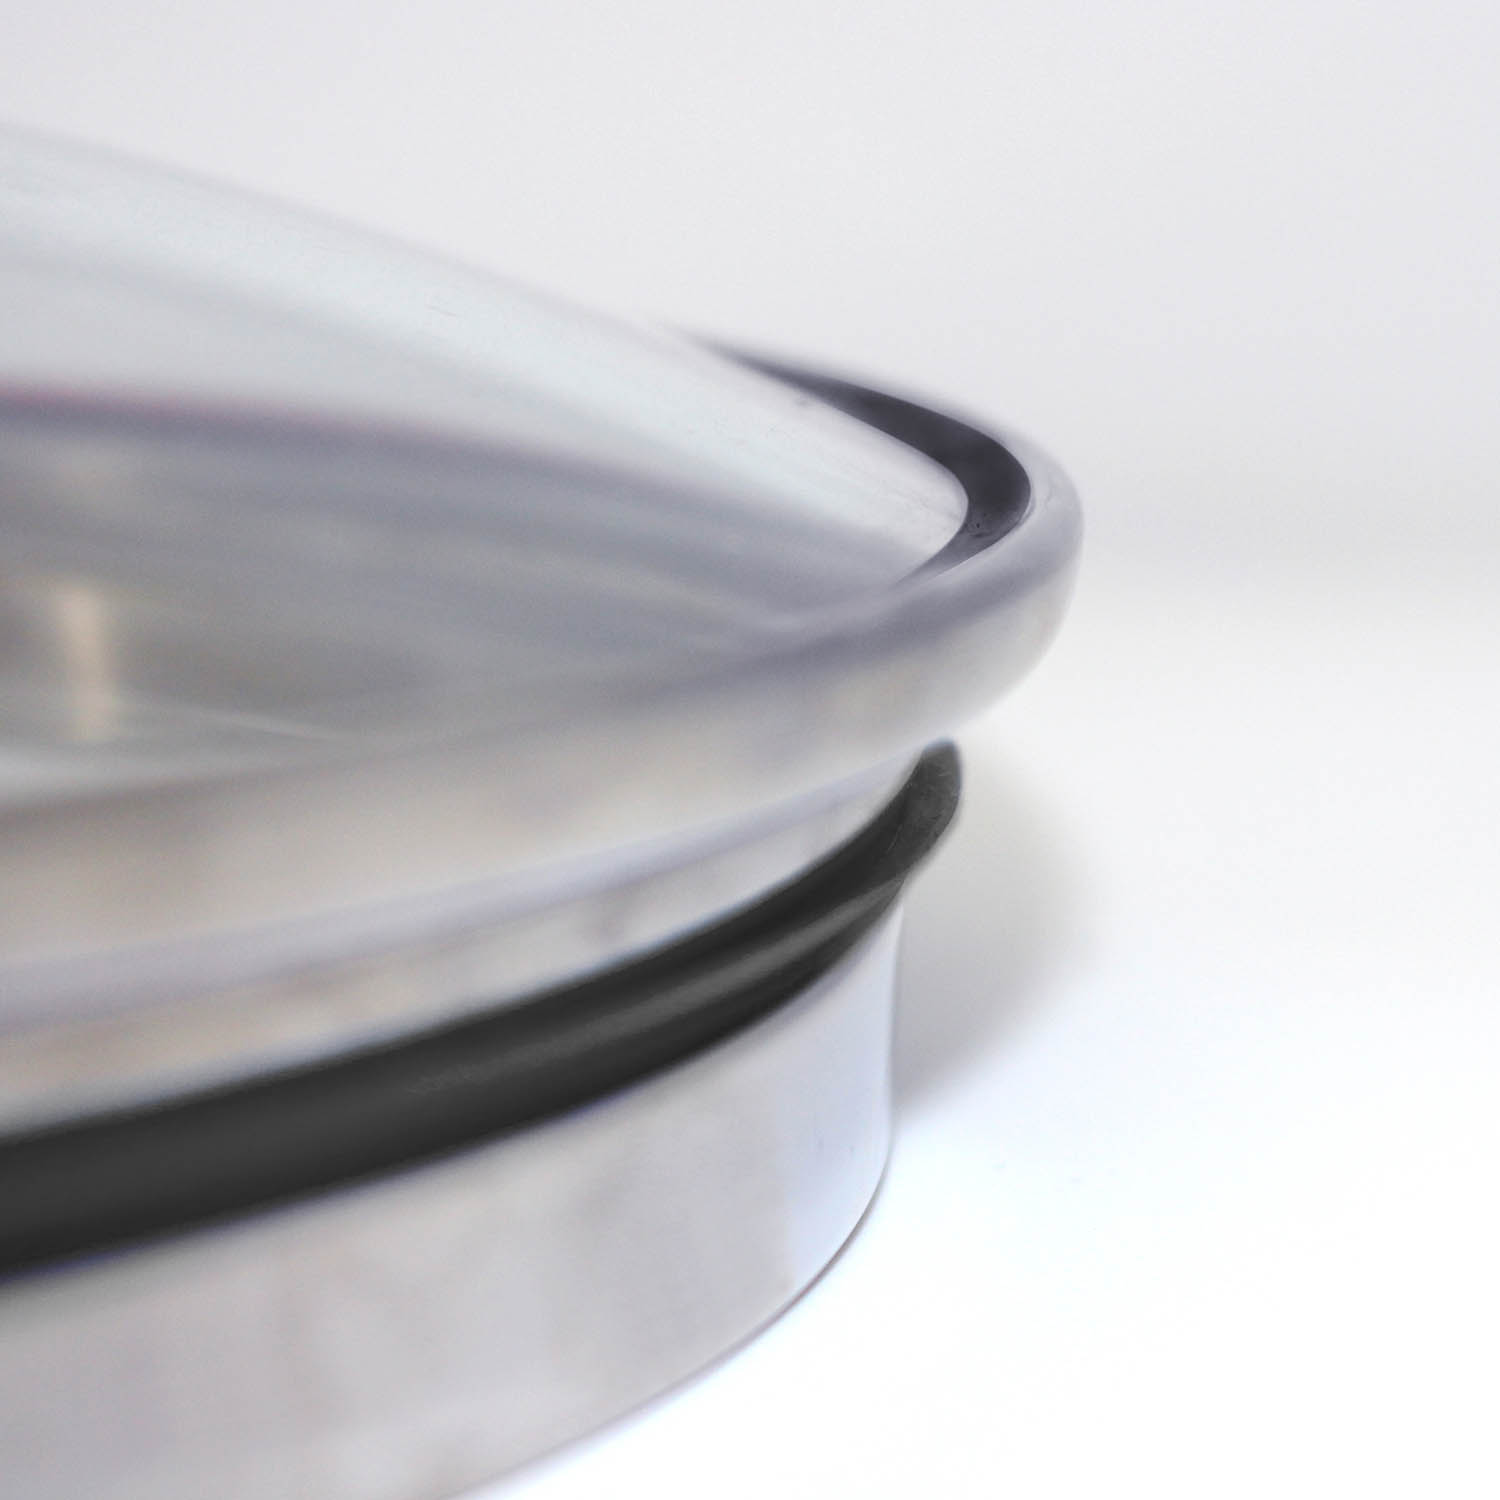 4-piece sets lid 1a-Neuware glass & SMART ELO trough | Cooking fan for stainless STEAM perfect pot COOKING steel BAKING | Englisch Cookware | set |